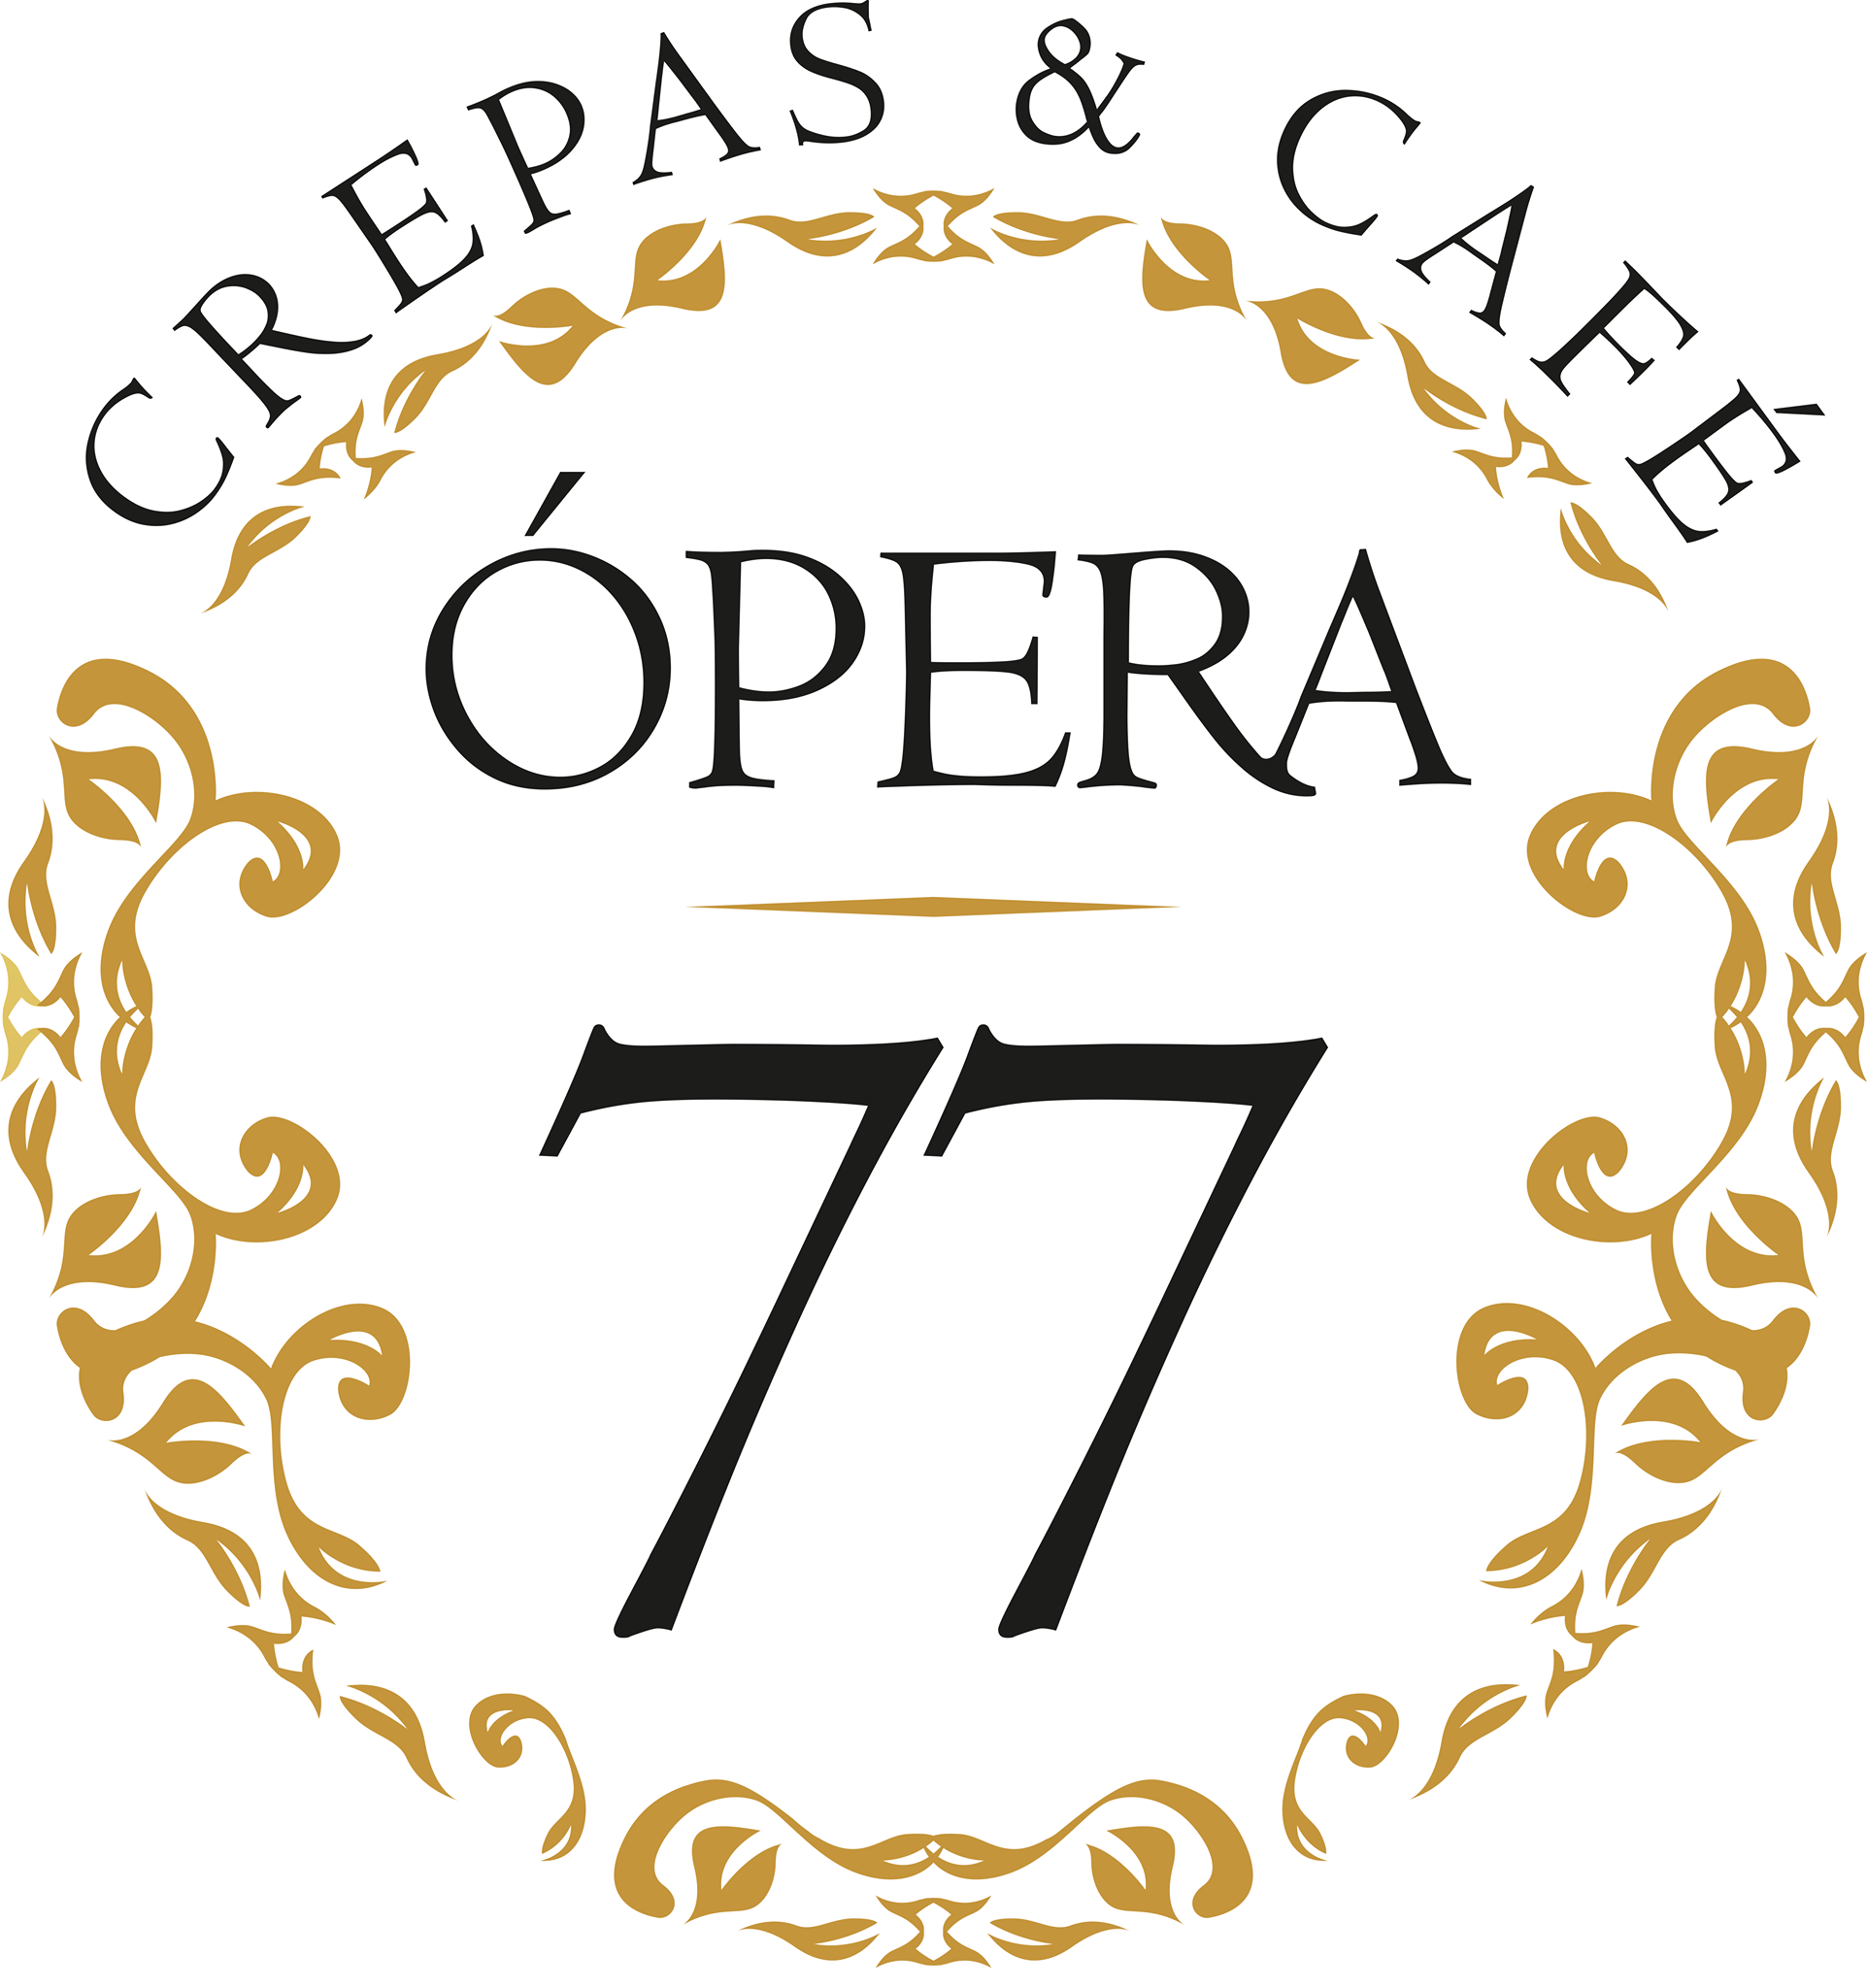 OPERA 77 CREPAS & CAFÉ